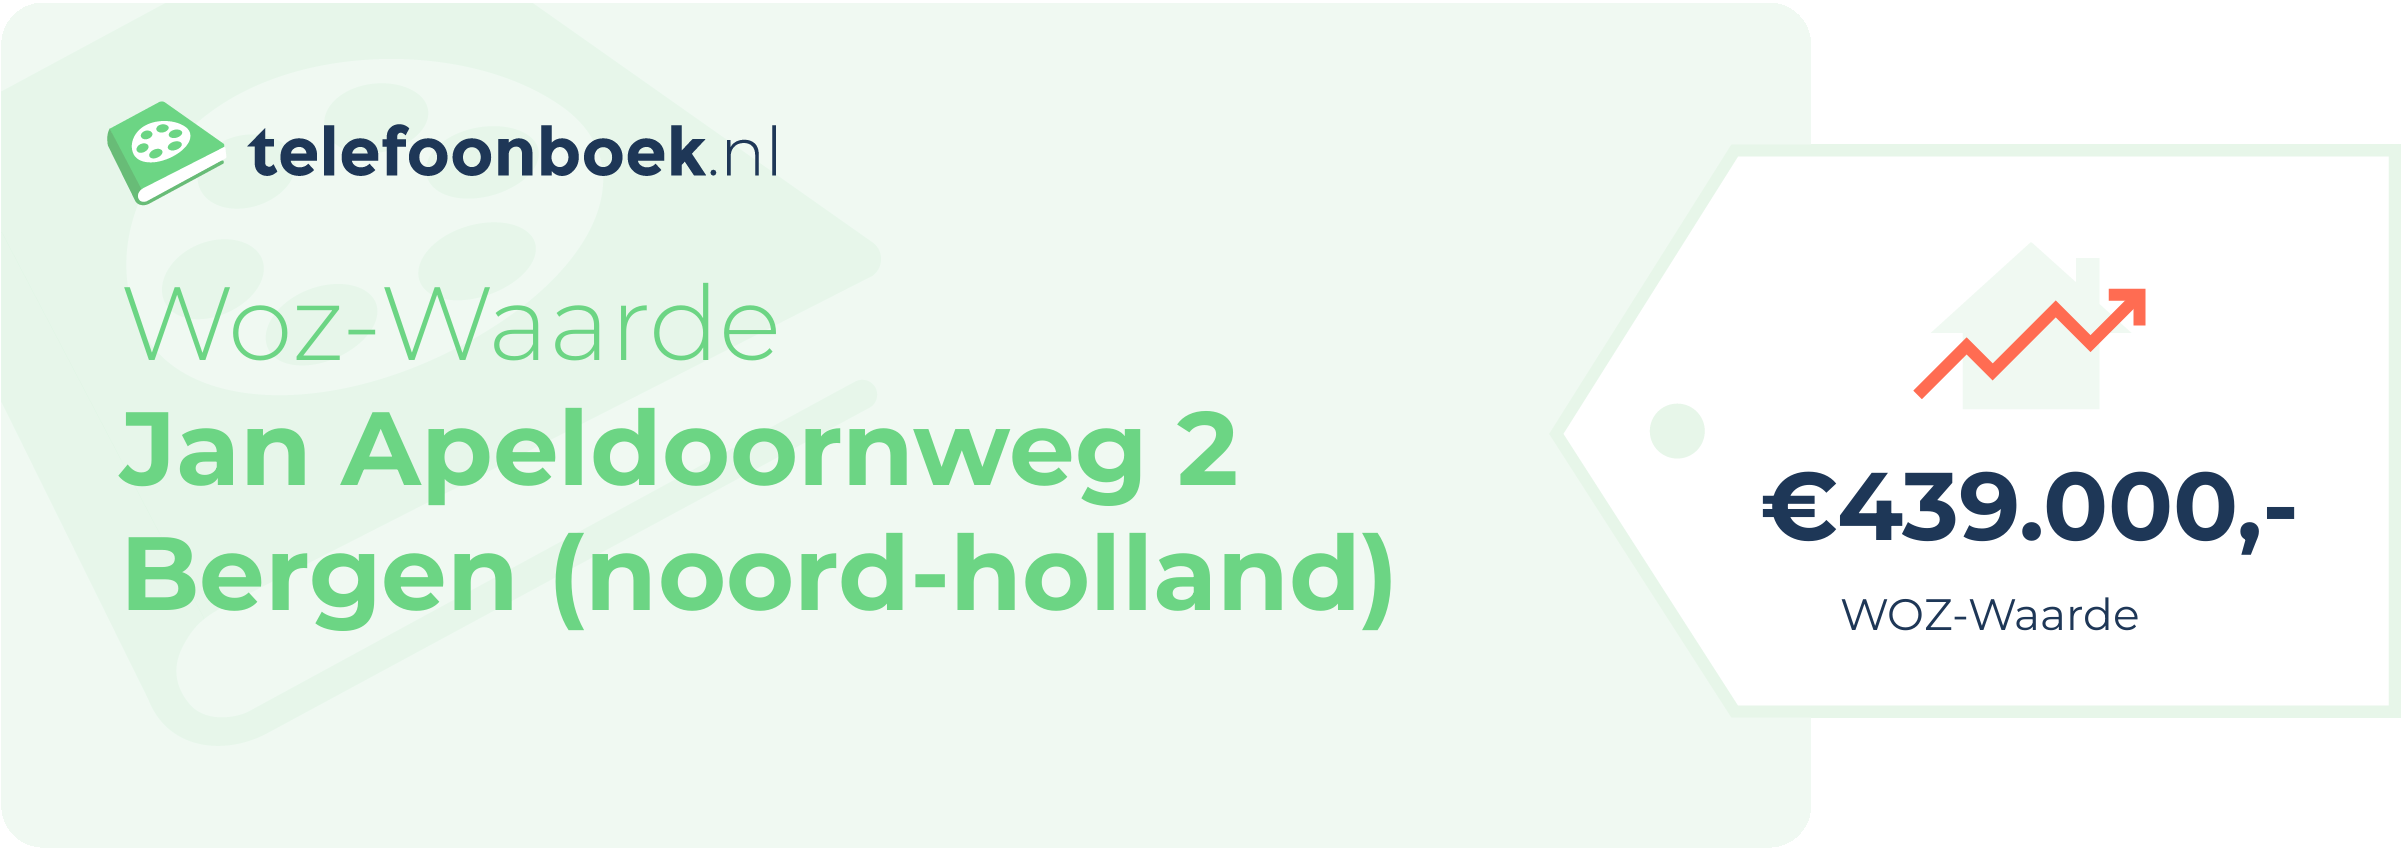 WOZ-waarde Jan Apeldoornweg 2 Bergen (Noord-Holland)